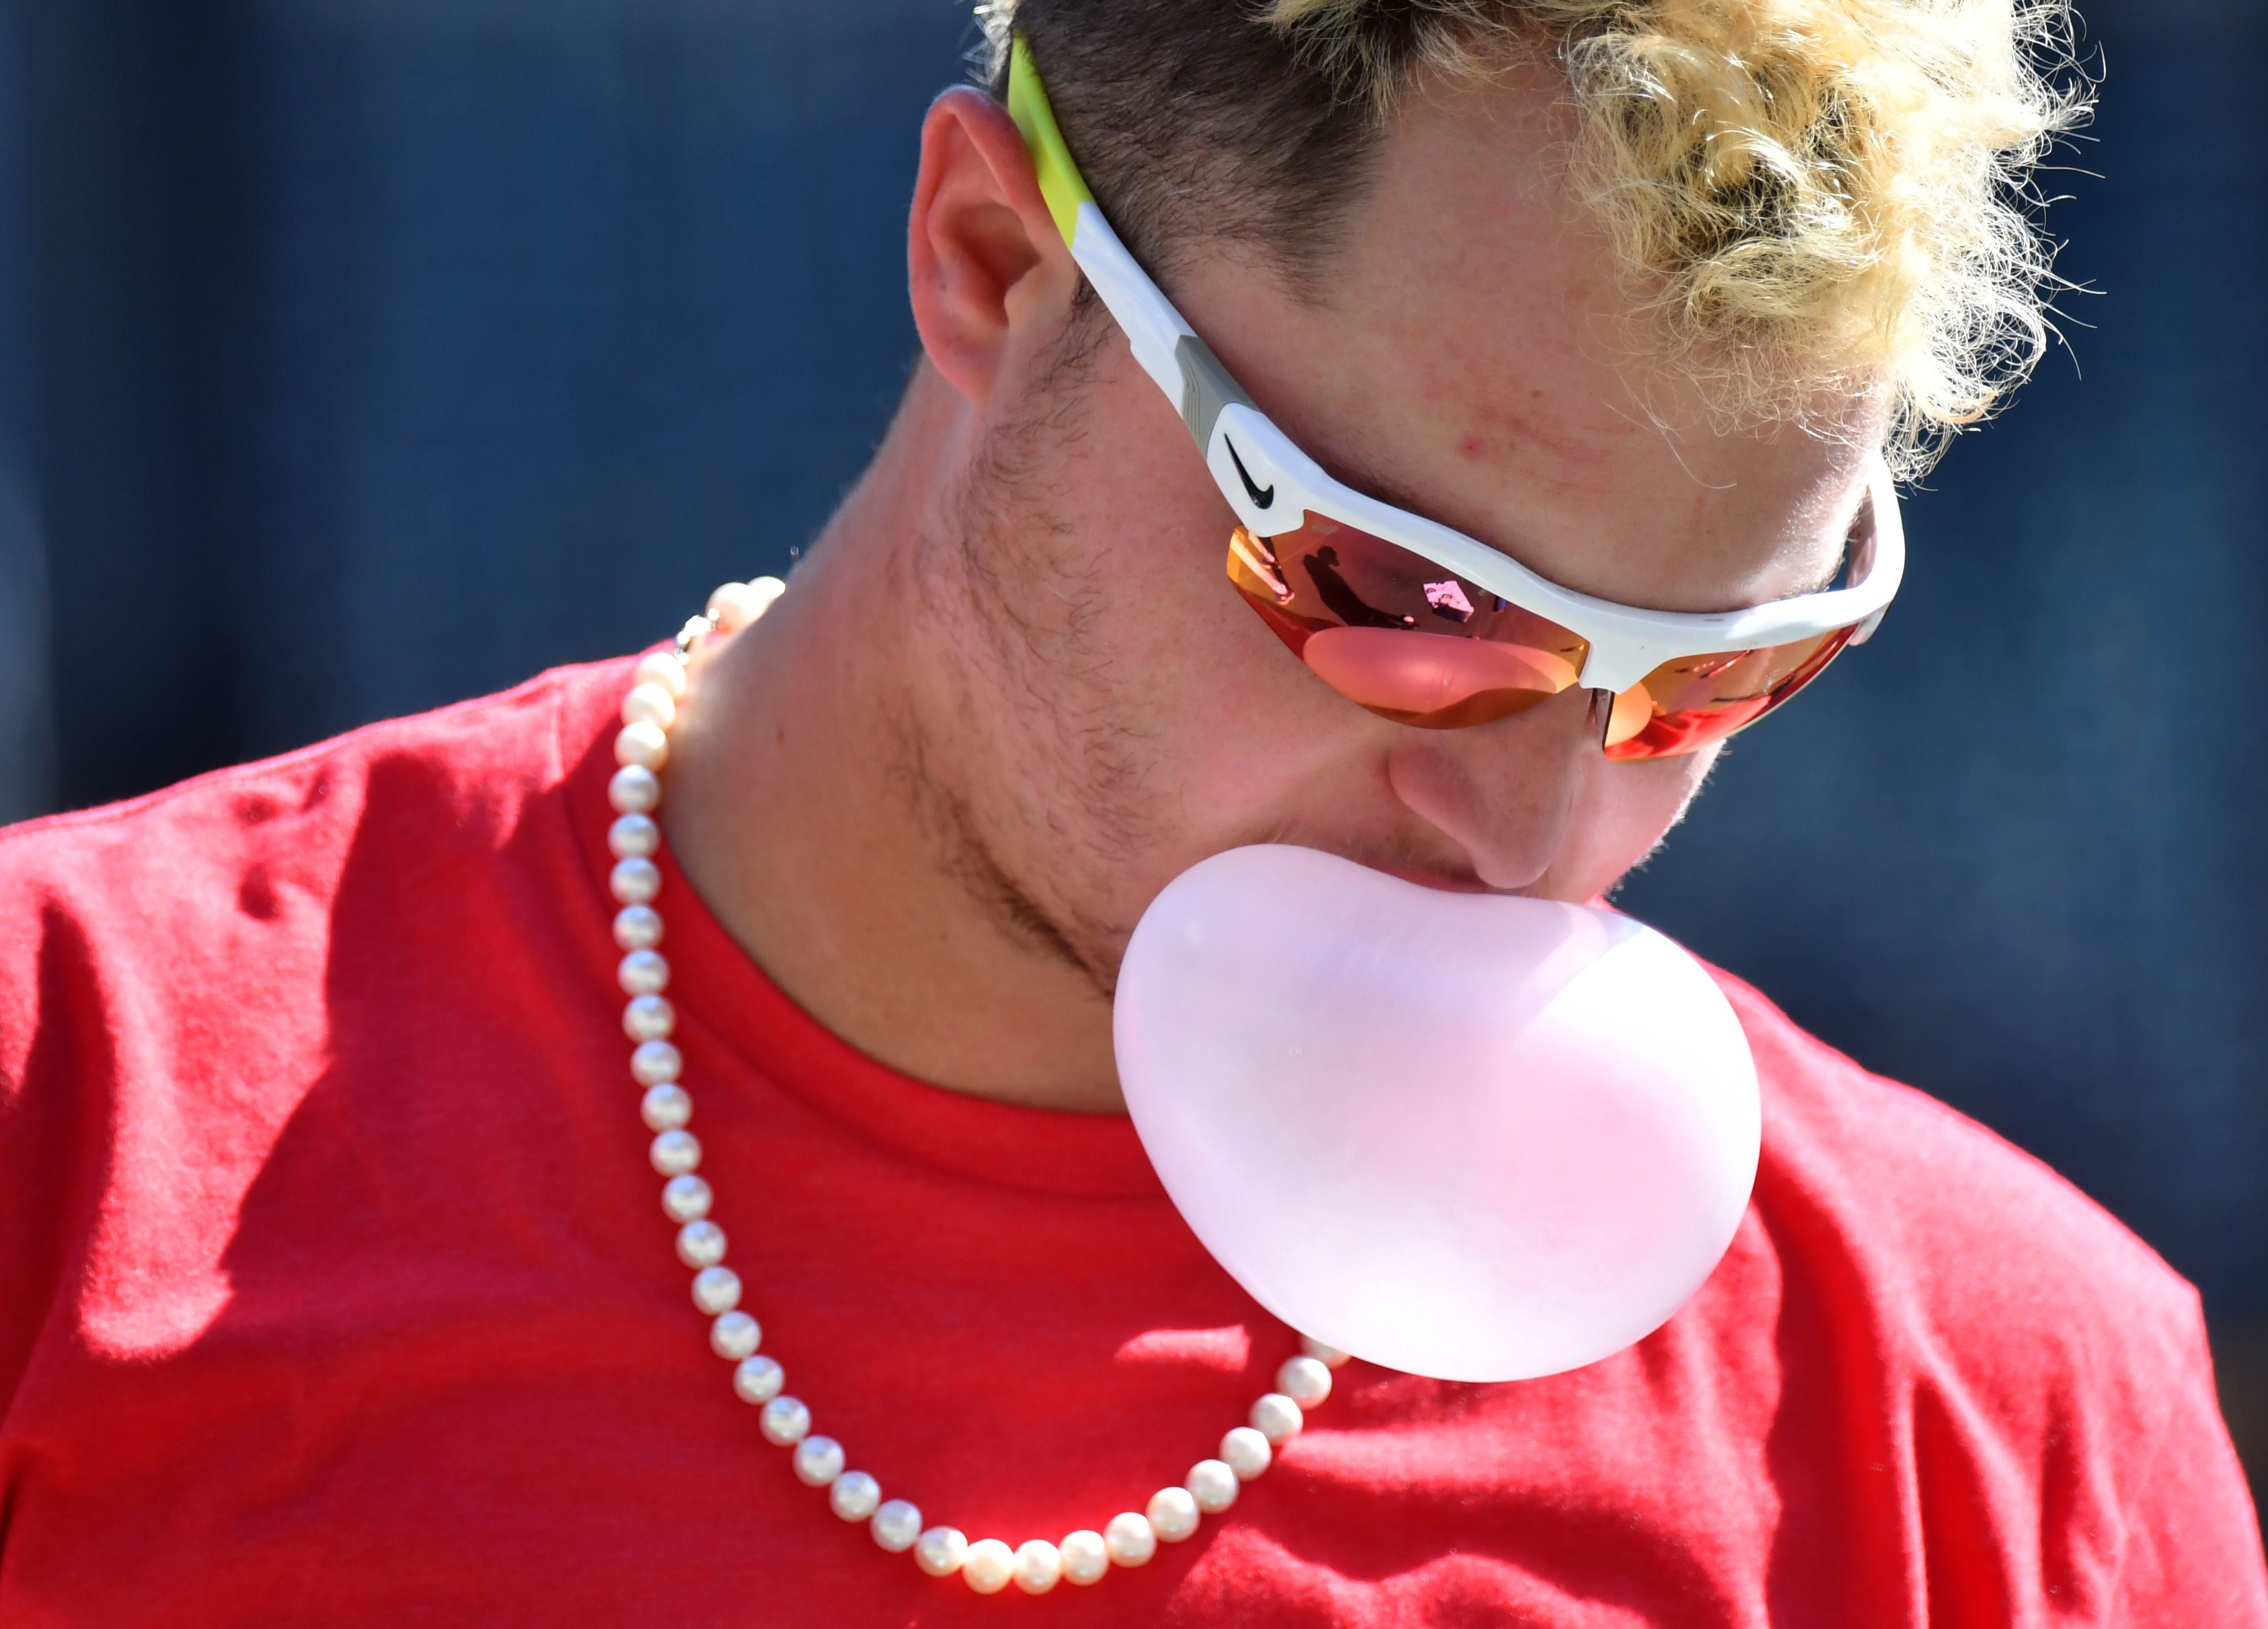 In Atlanta, it's Joctoberfest! Pederson's pearls a hit with Braves fans